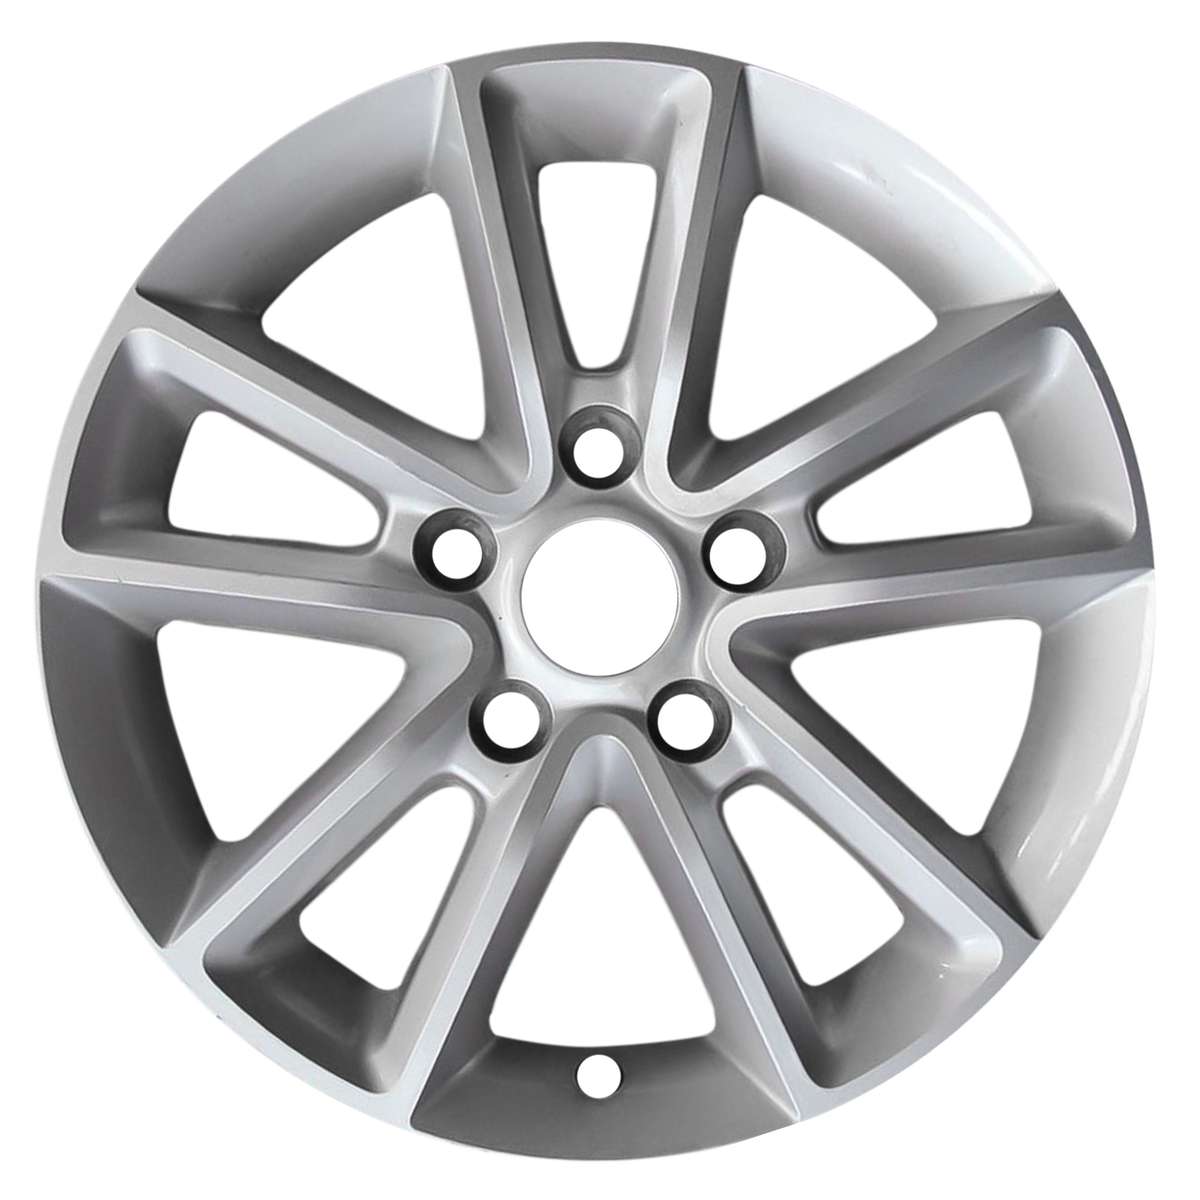 2016 Dodge Journey 17" OEM Wheel Rim W2399S